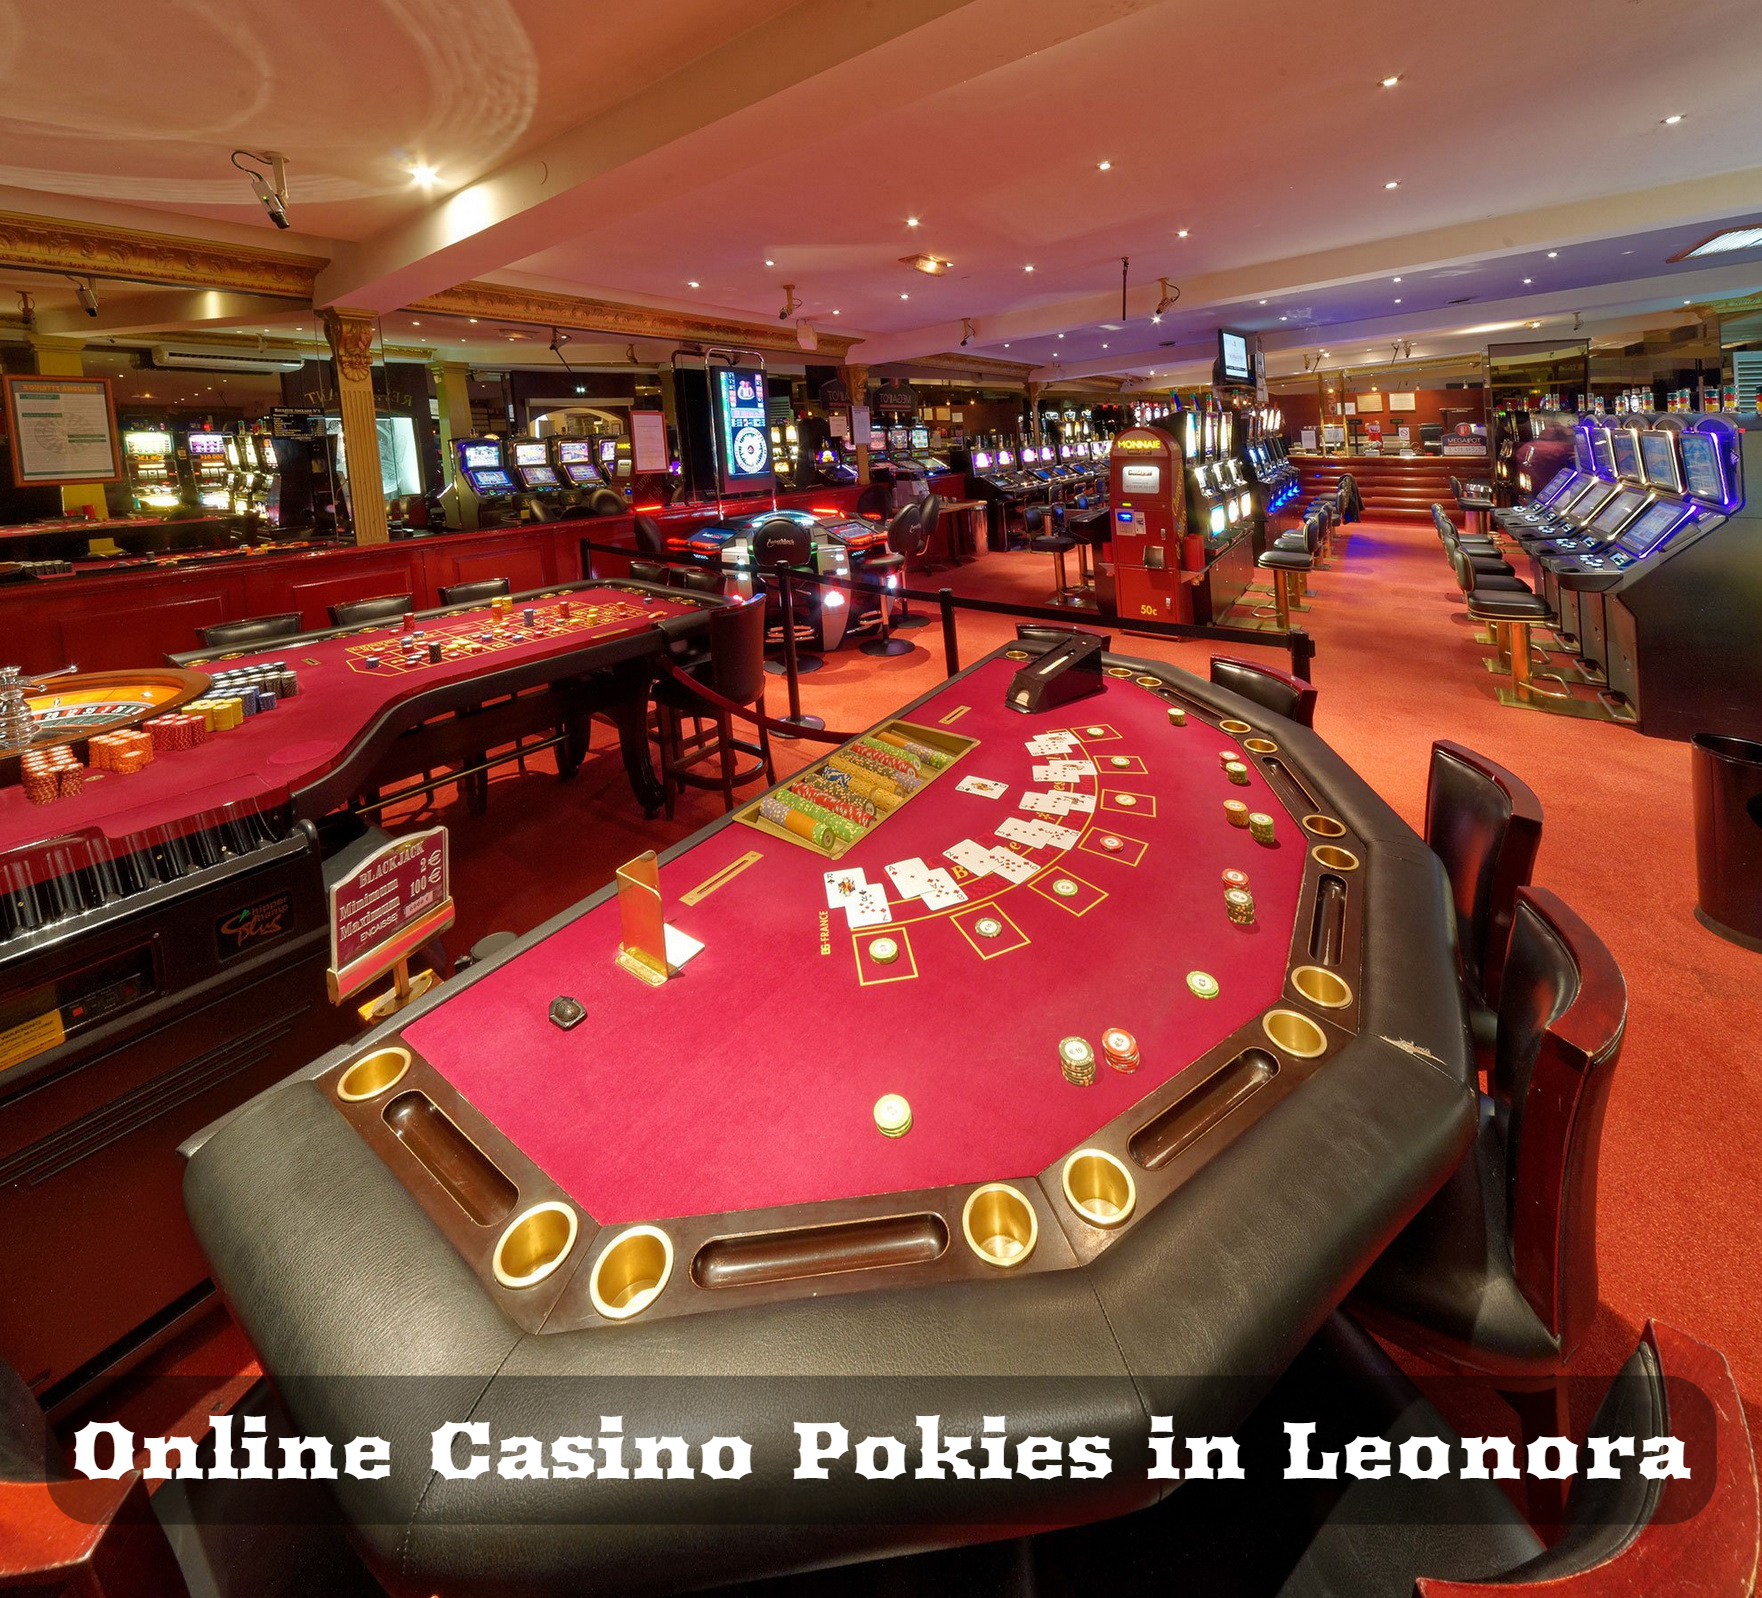 Online Casino Pokies in Leonora